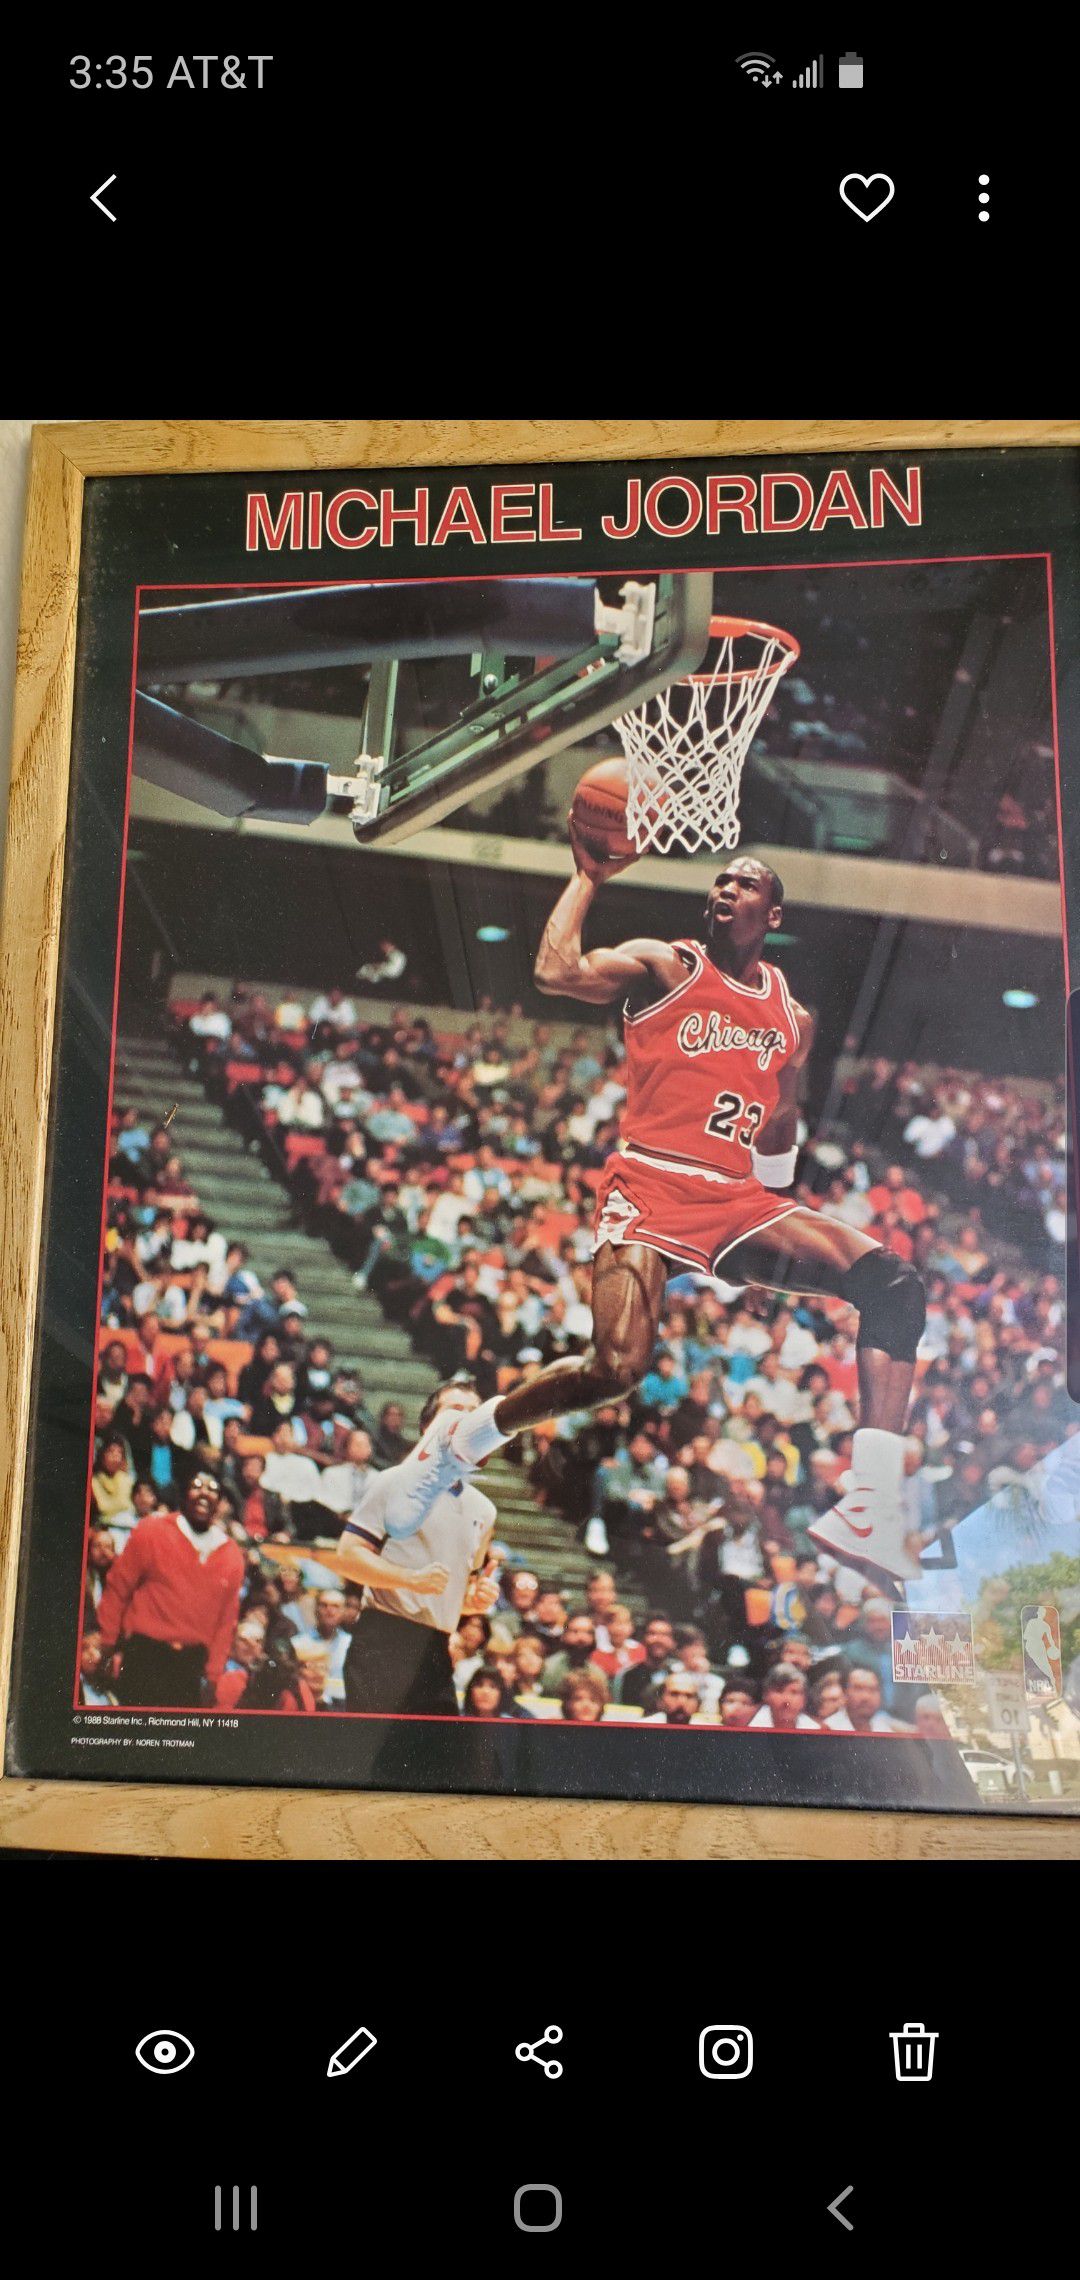 Classic Michael Jordan framed poster!